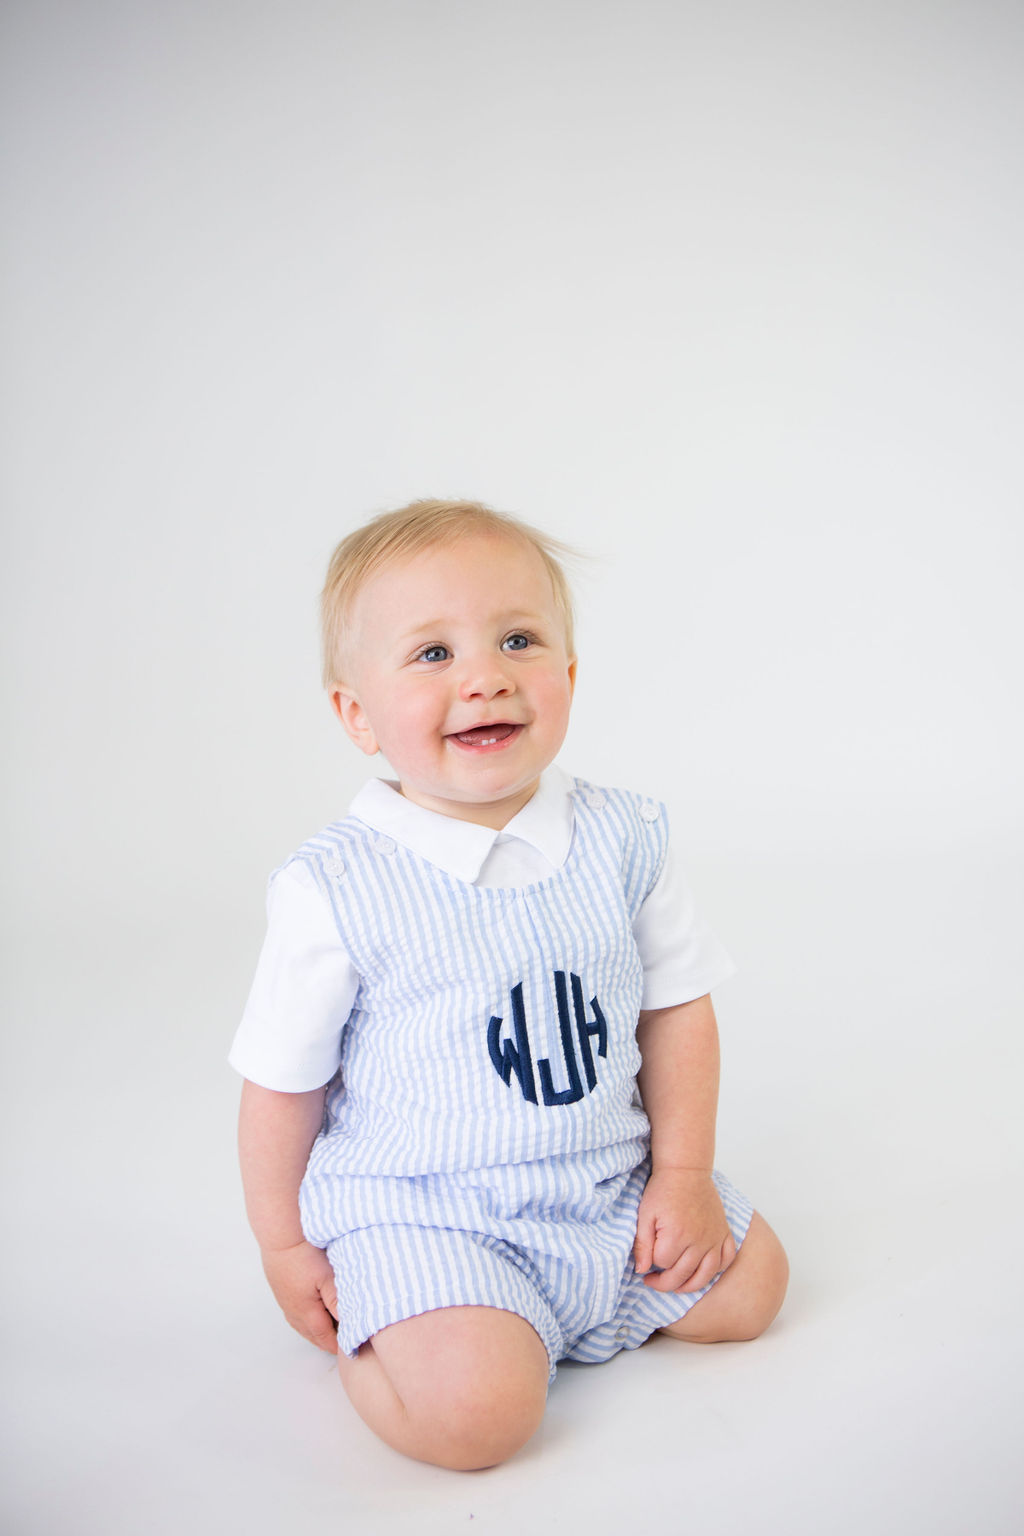 toddler in mongrammed jumper portrait